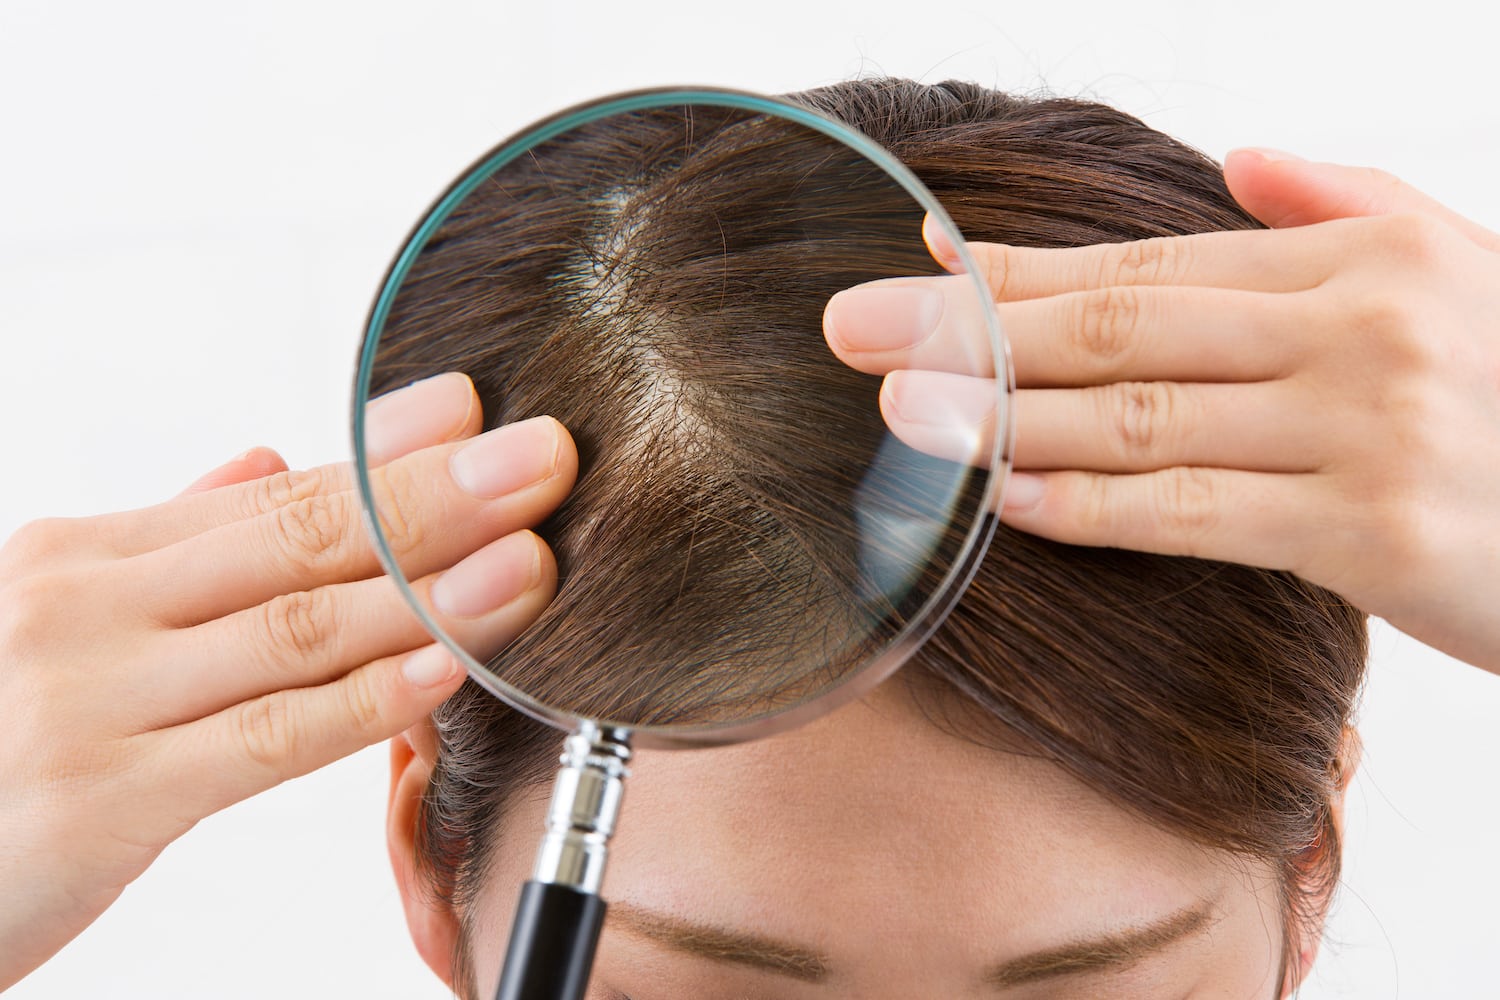 Blood circulation in scalp image